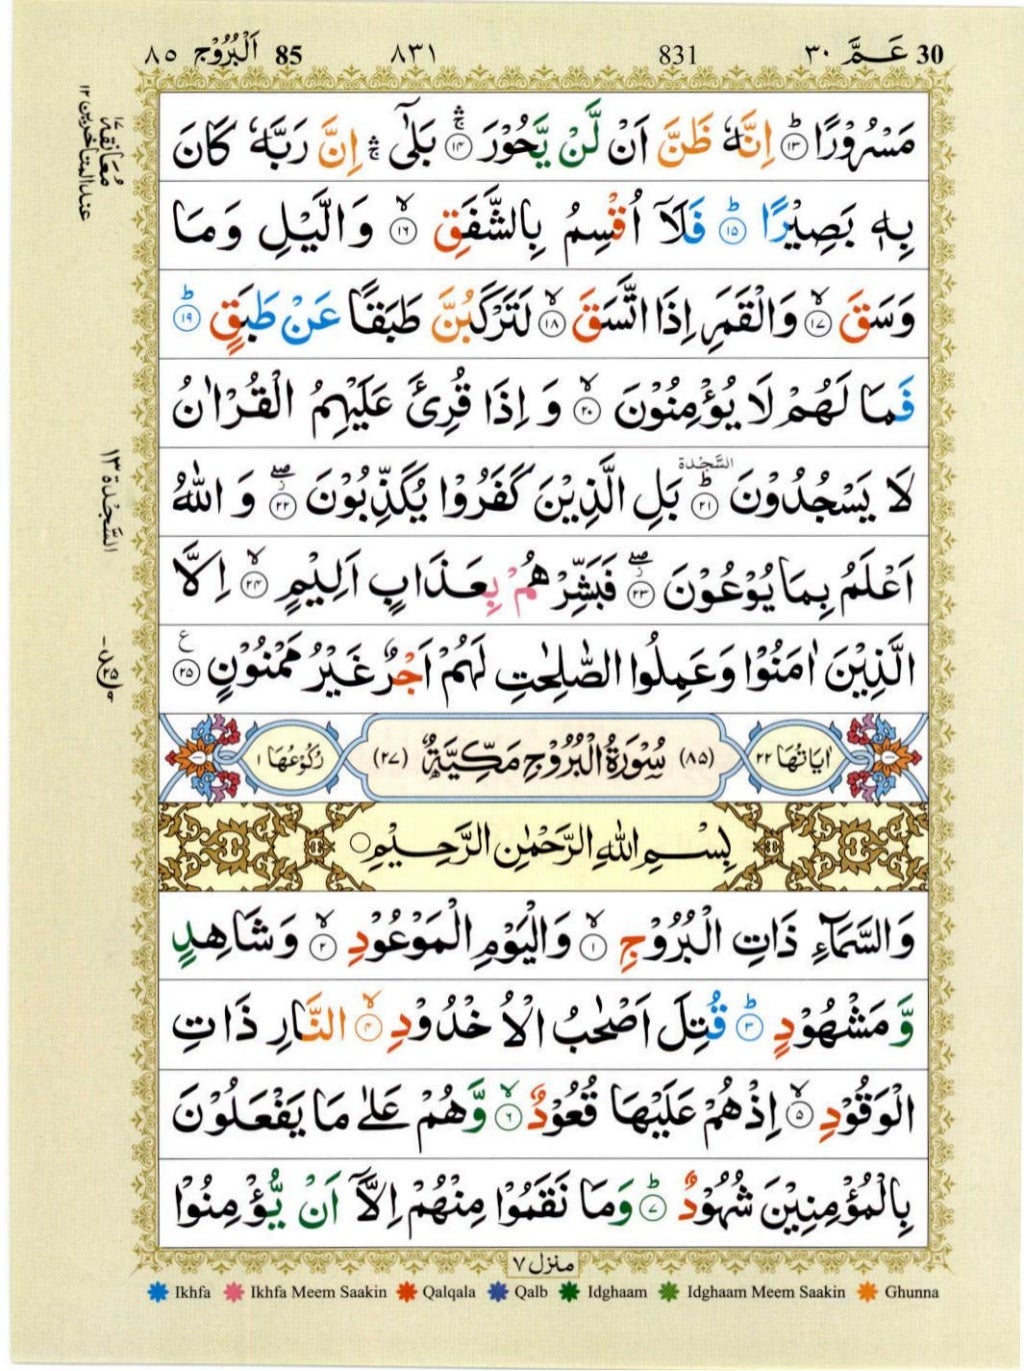 Quran With Tajwid Surah 85 ﴾القرآن سورۃ البروج﴿ Al Burooj 🙪 Pdf